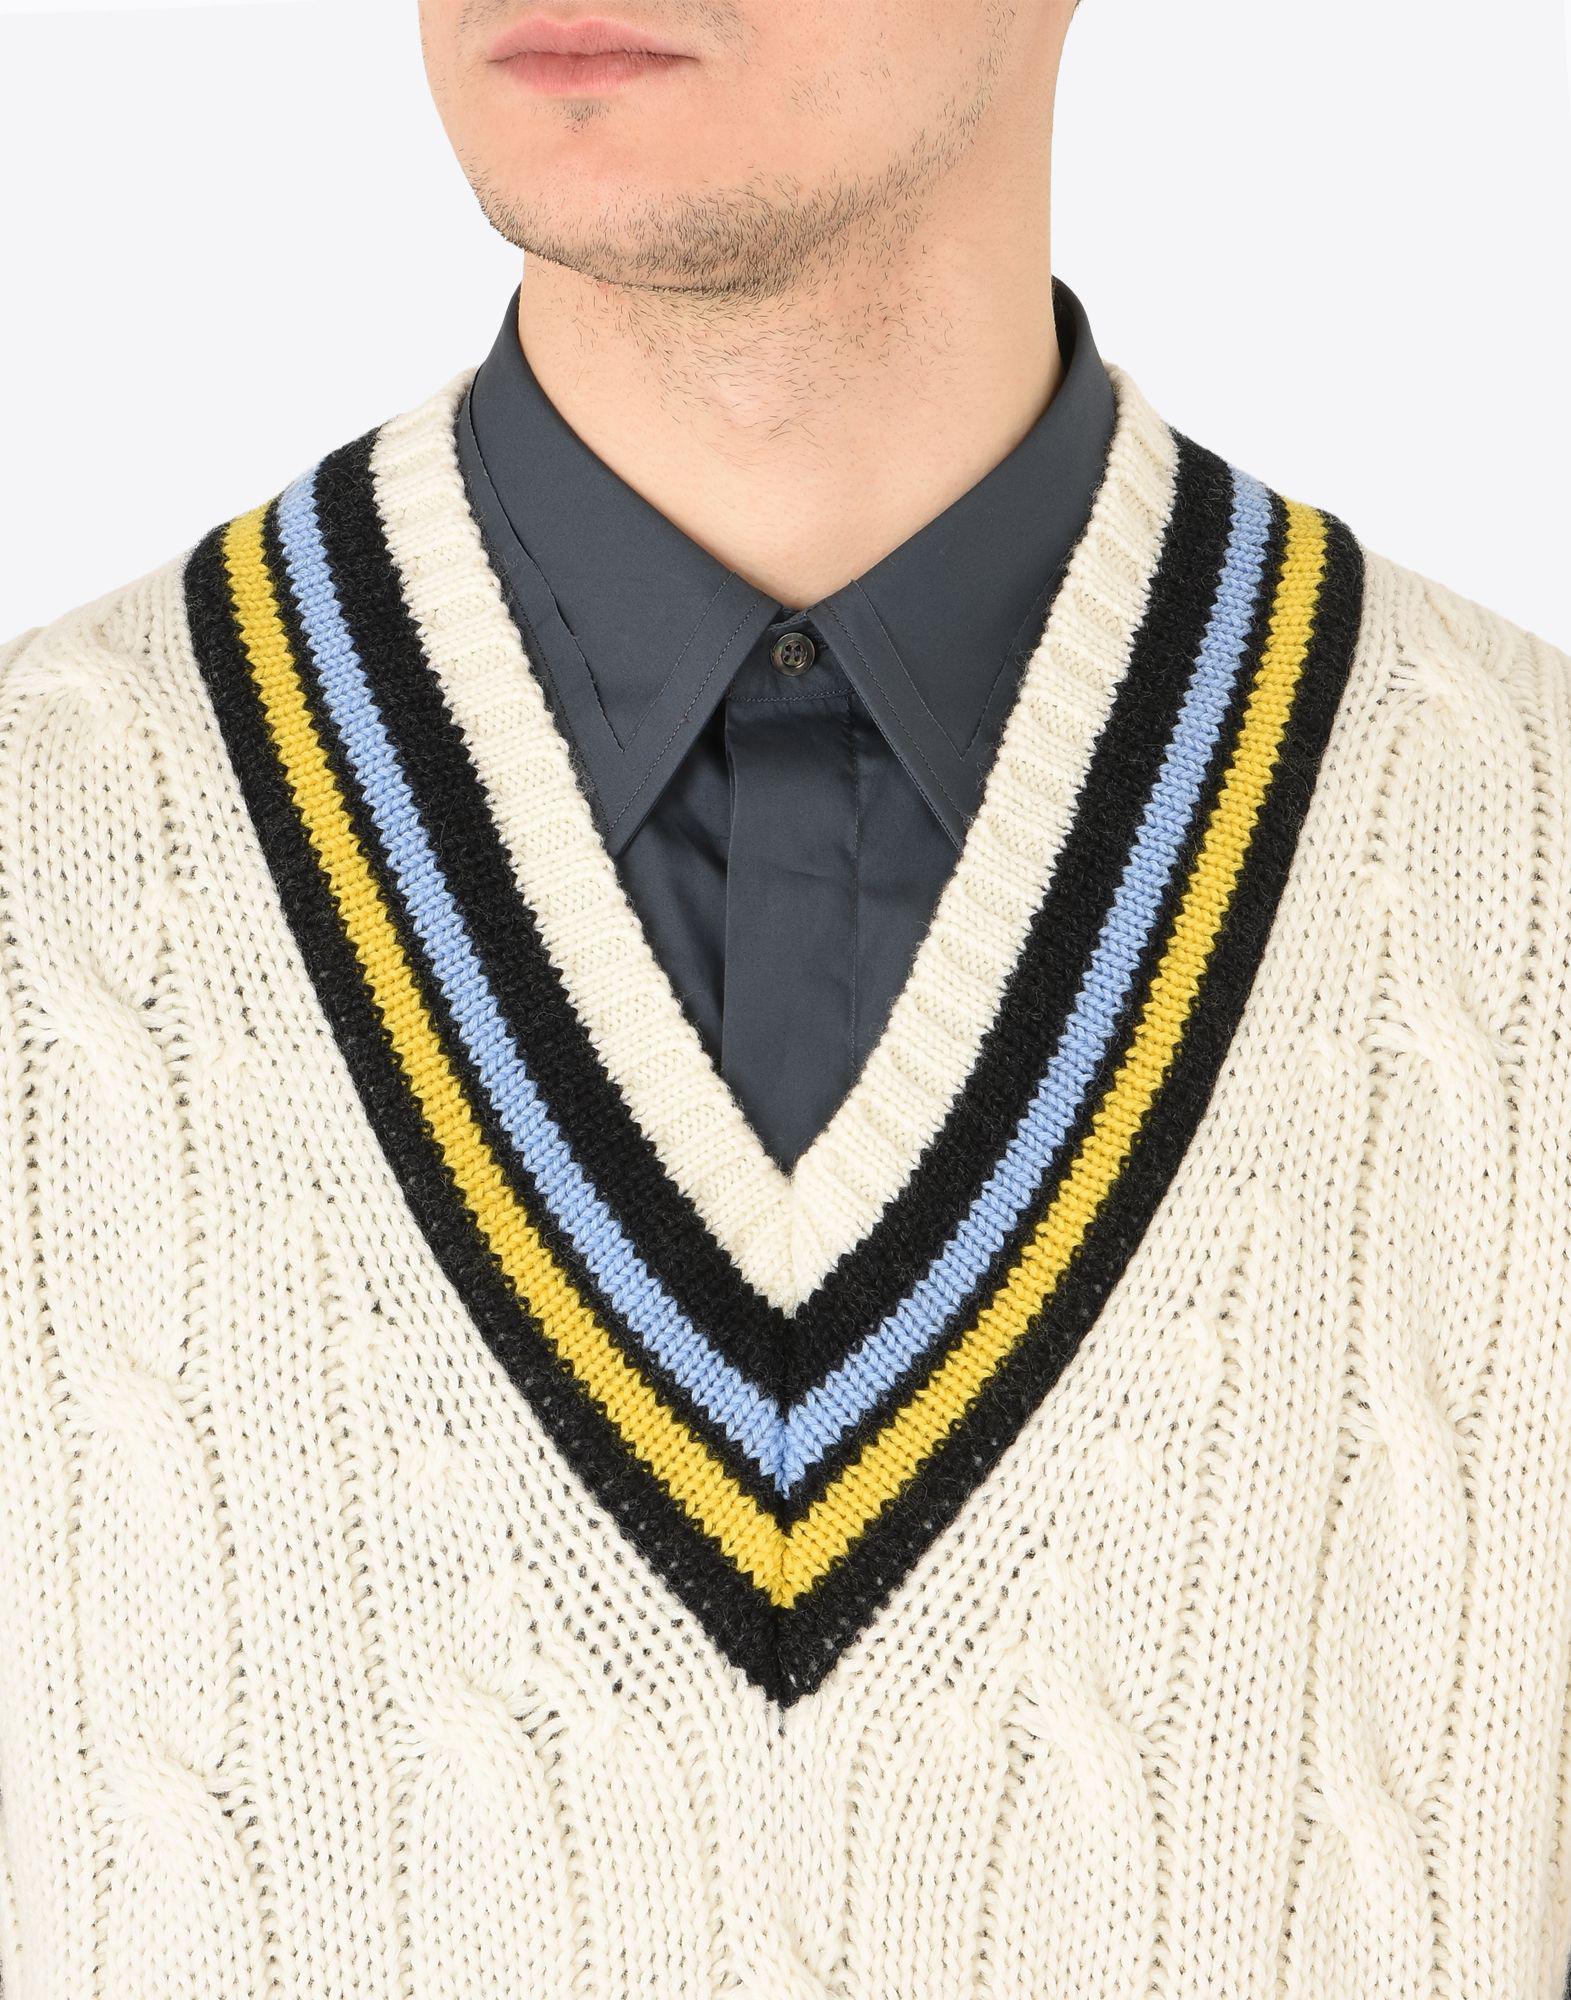 Maison Margiela Wool Short Sleeve Cricket Sweater in White for Men - Lyst